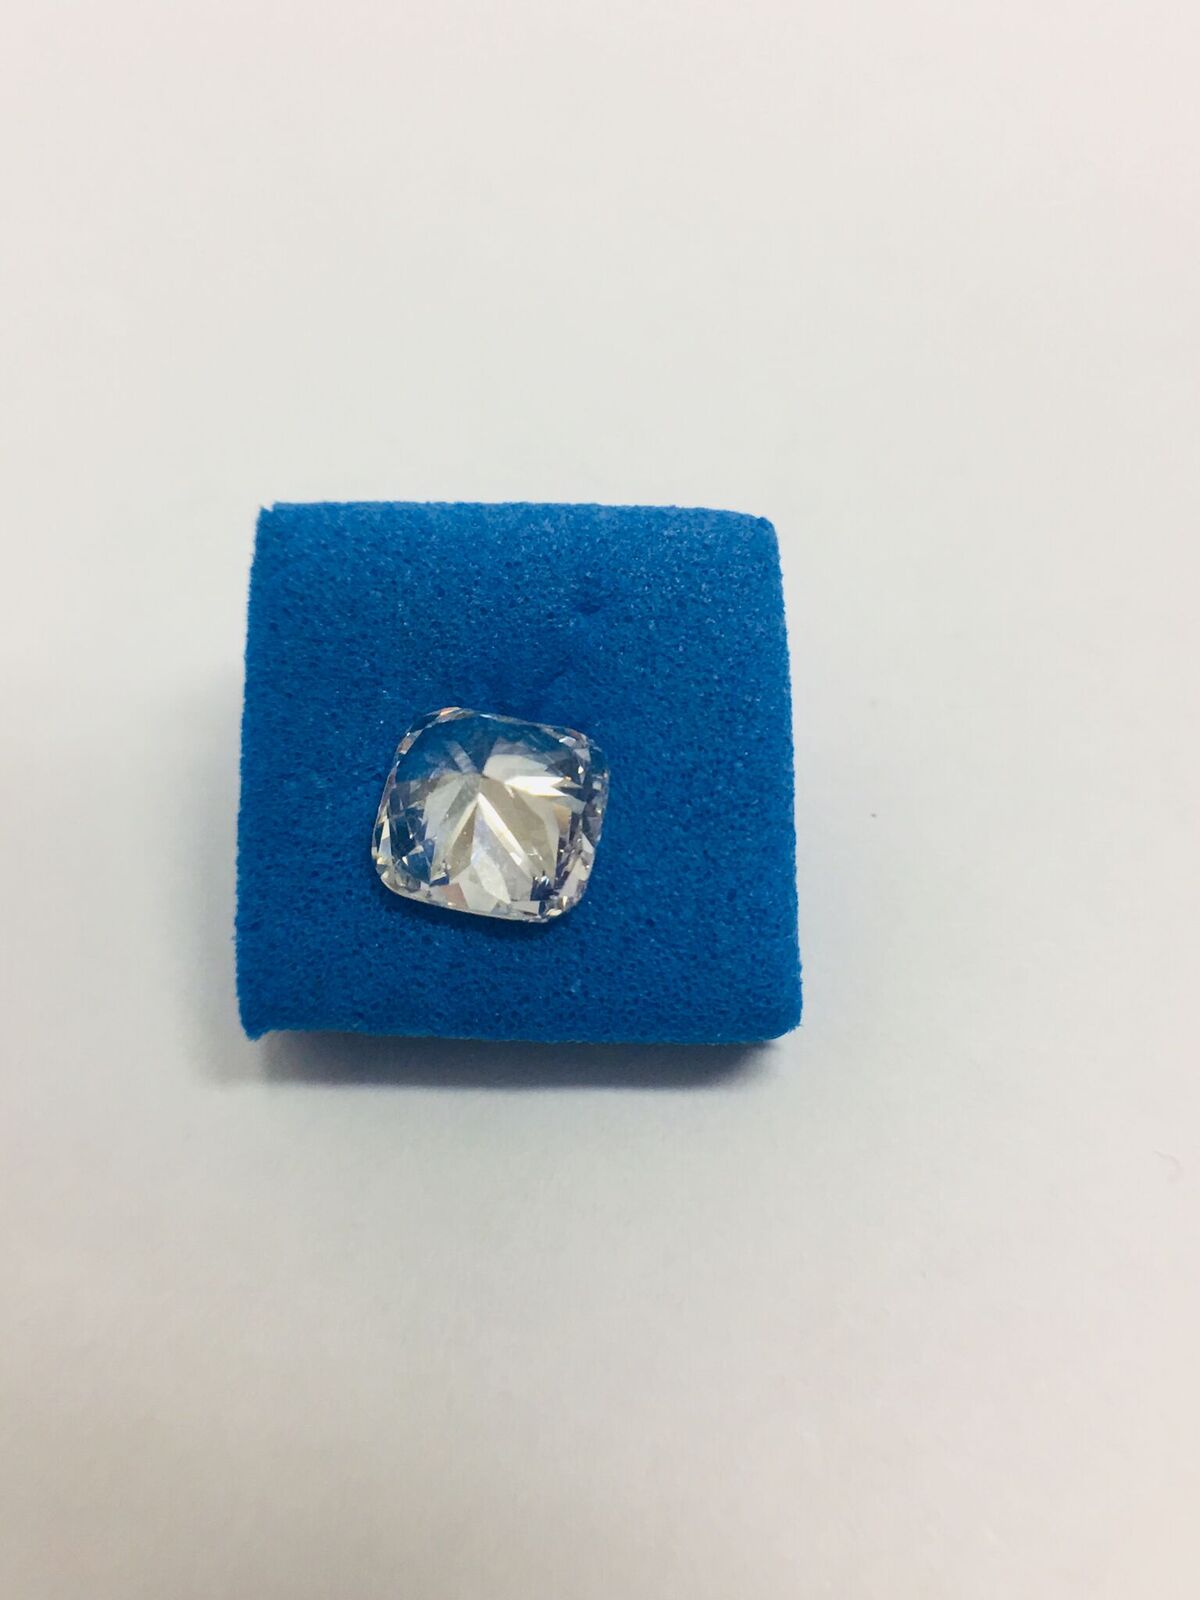 1.00ct cushion cut natural diamond - Image 9 of 14